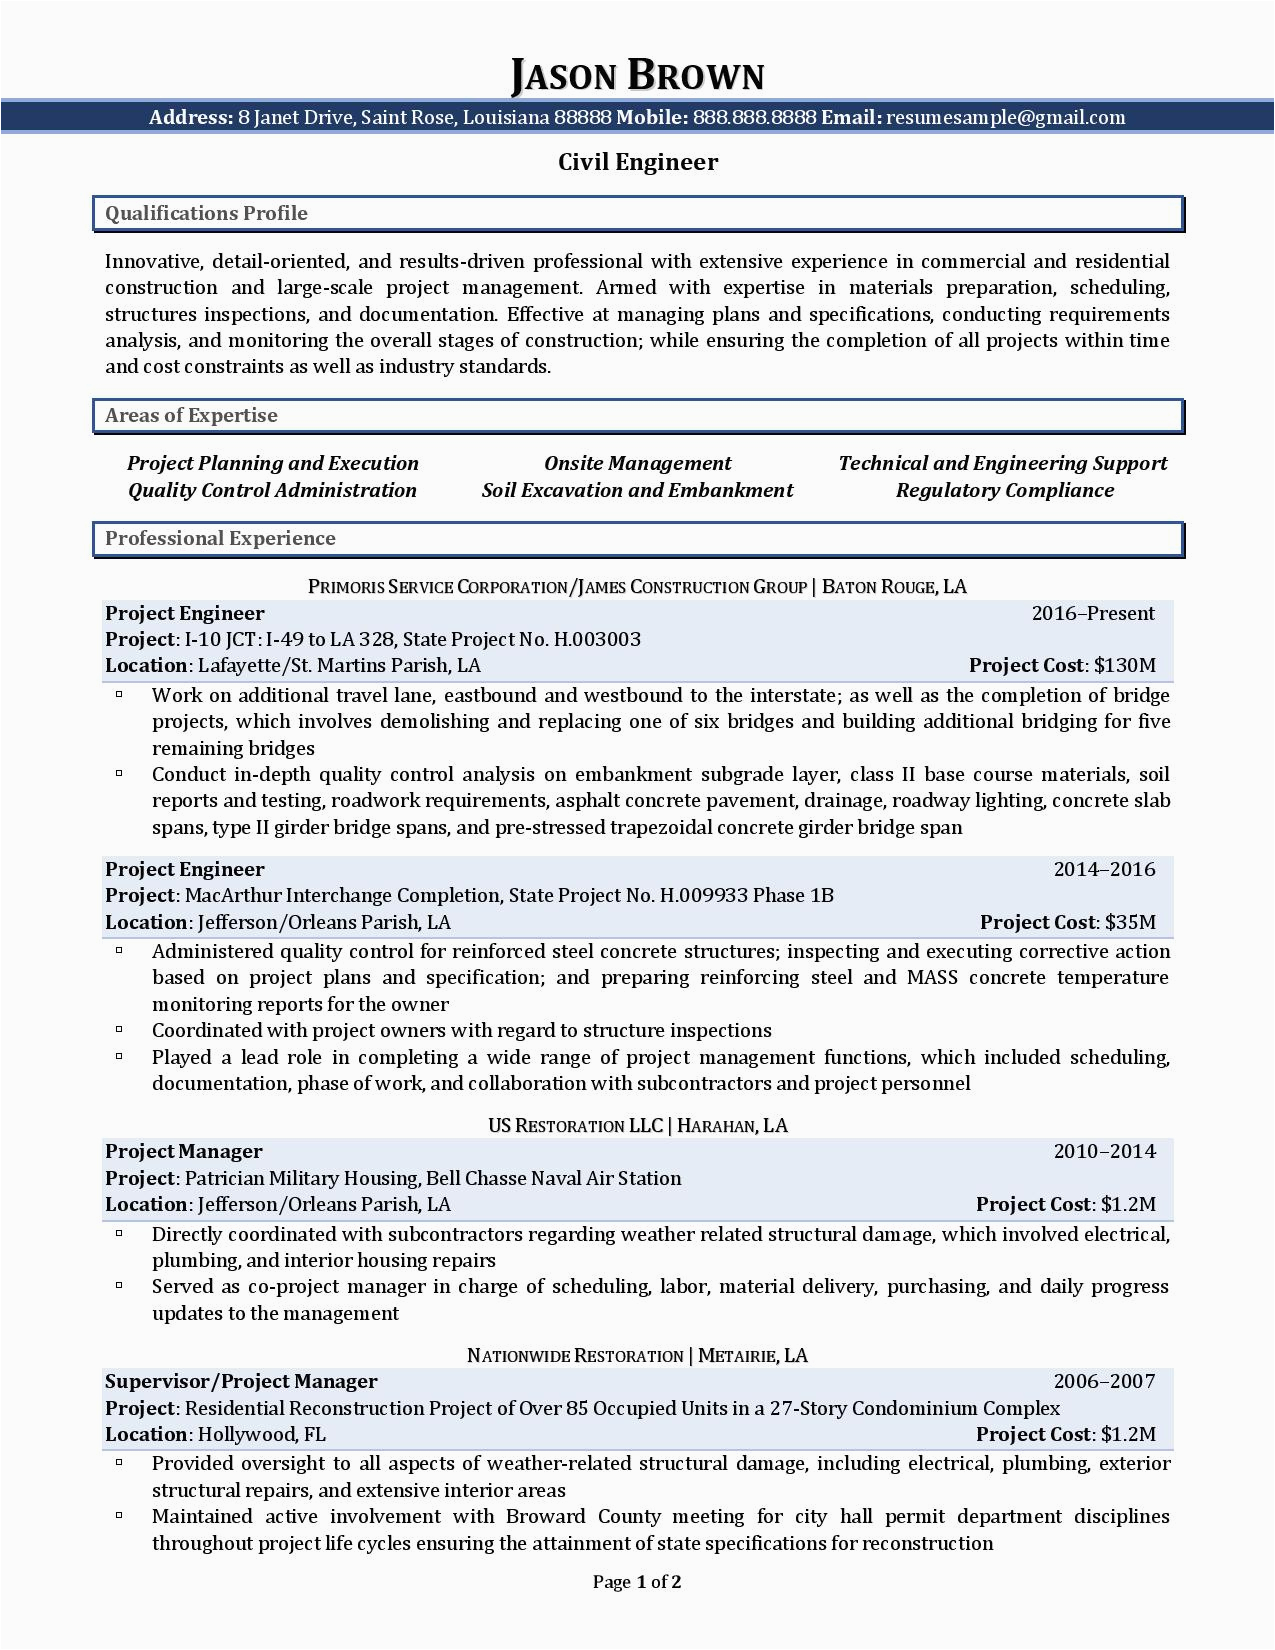 Sample Resume format for Civil Engineers Civil Engineer Resume Examples